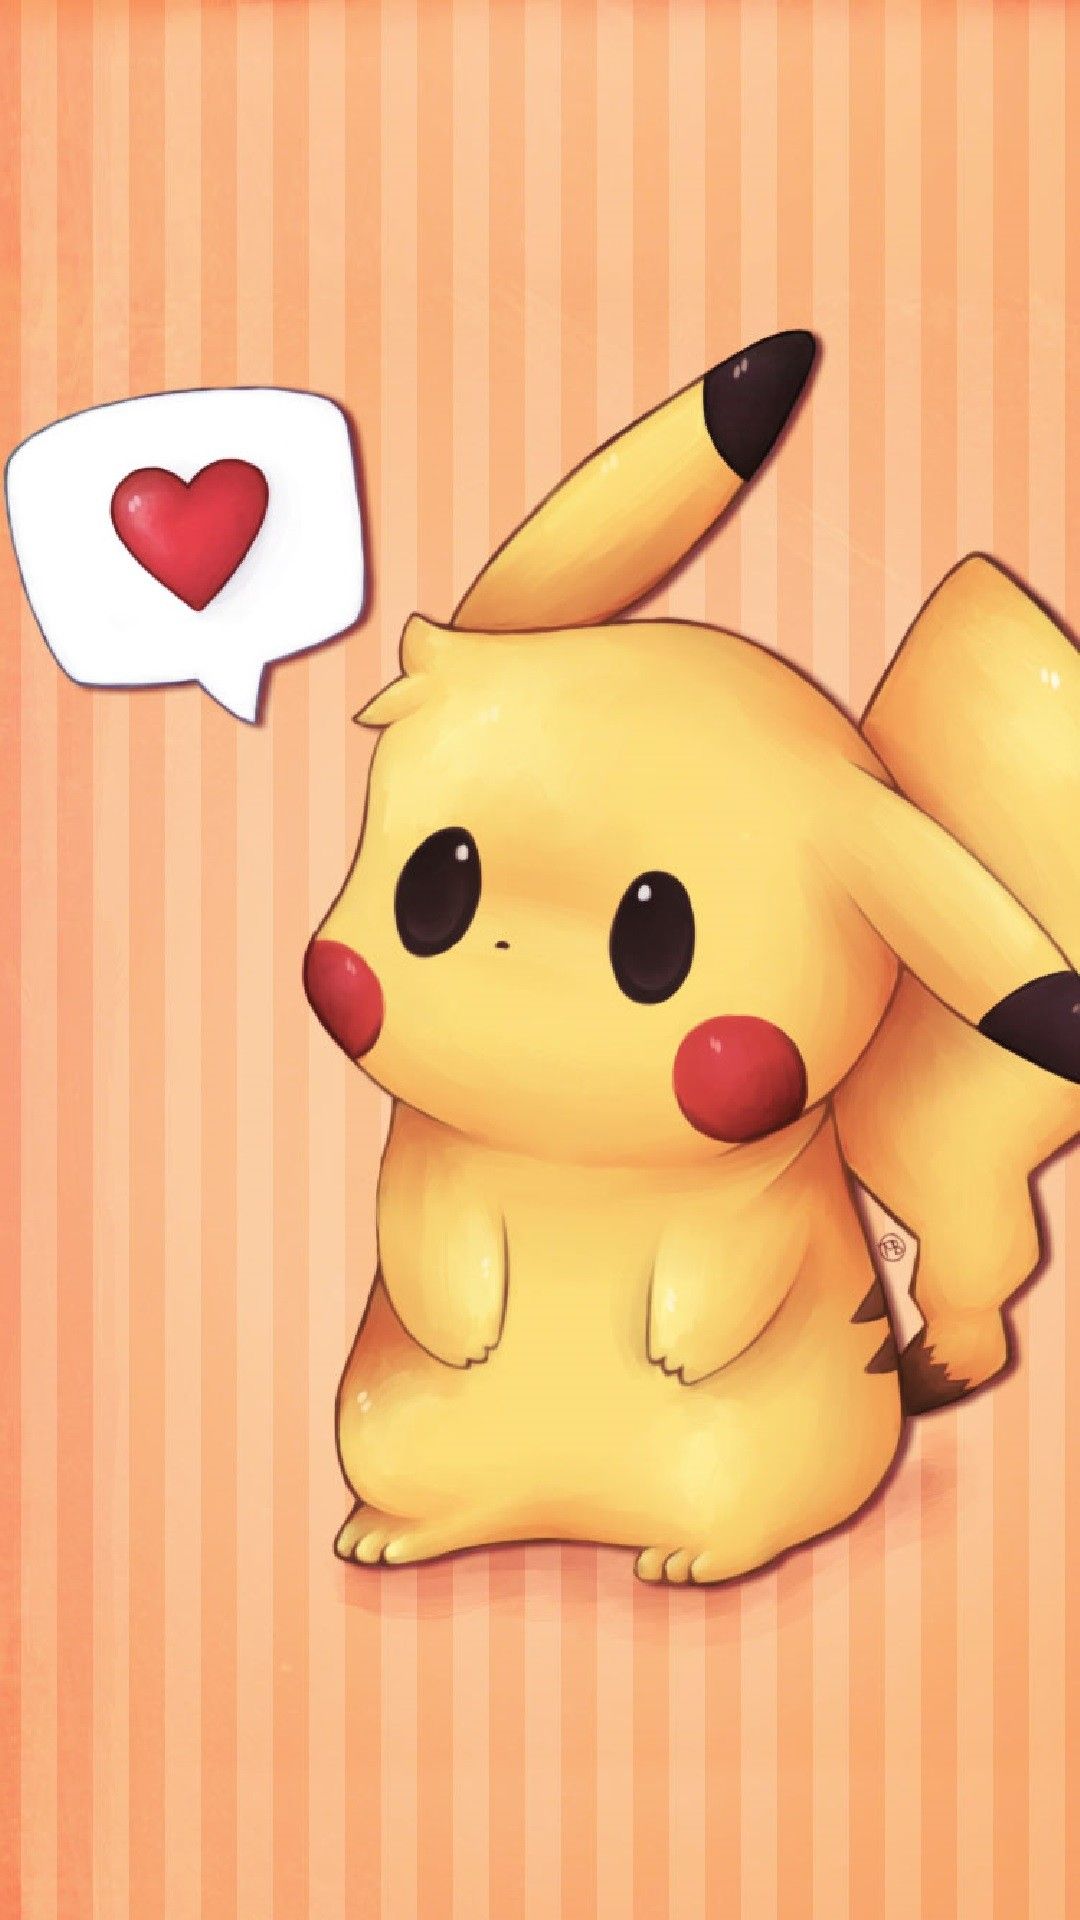 Download game pikachu kawai free